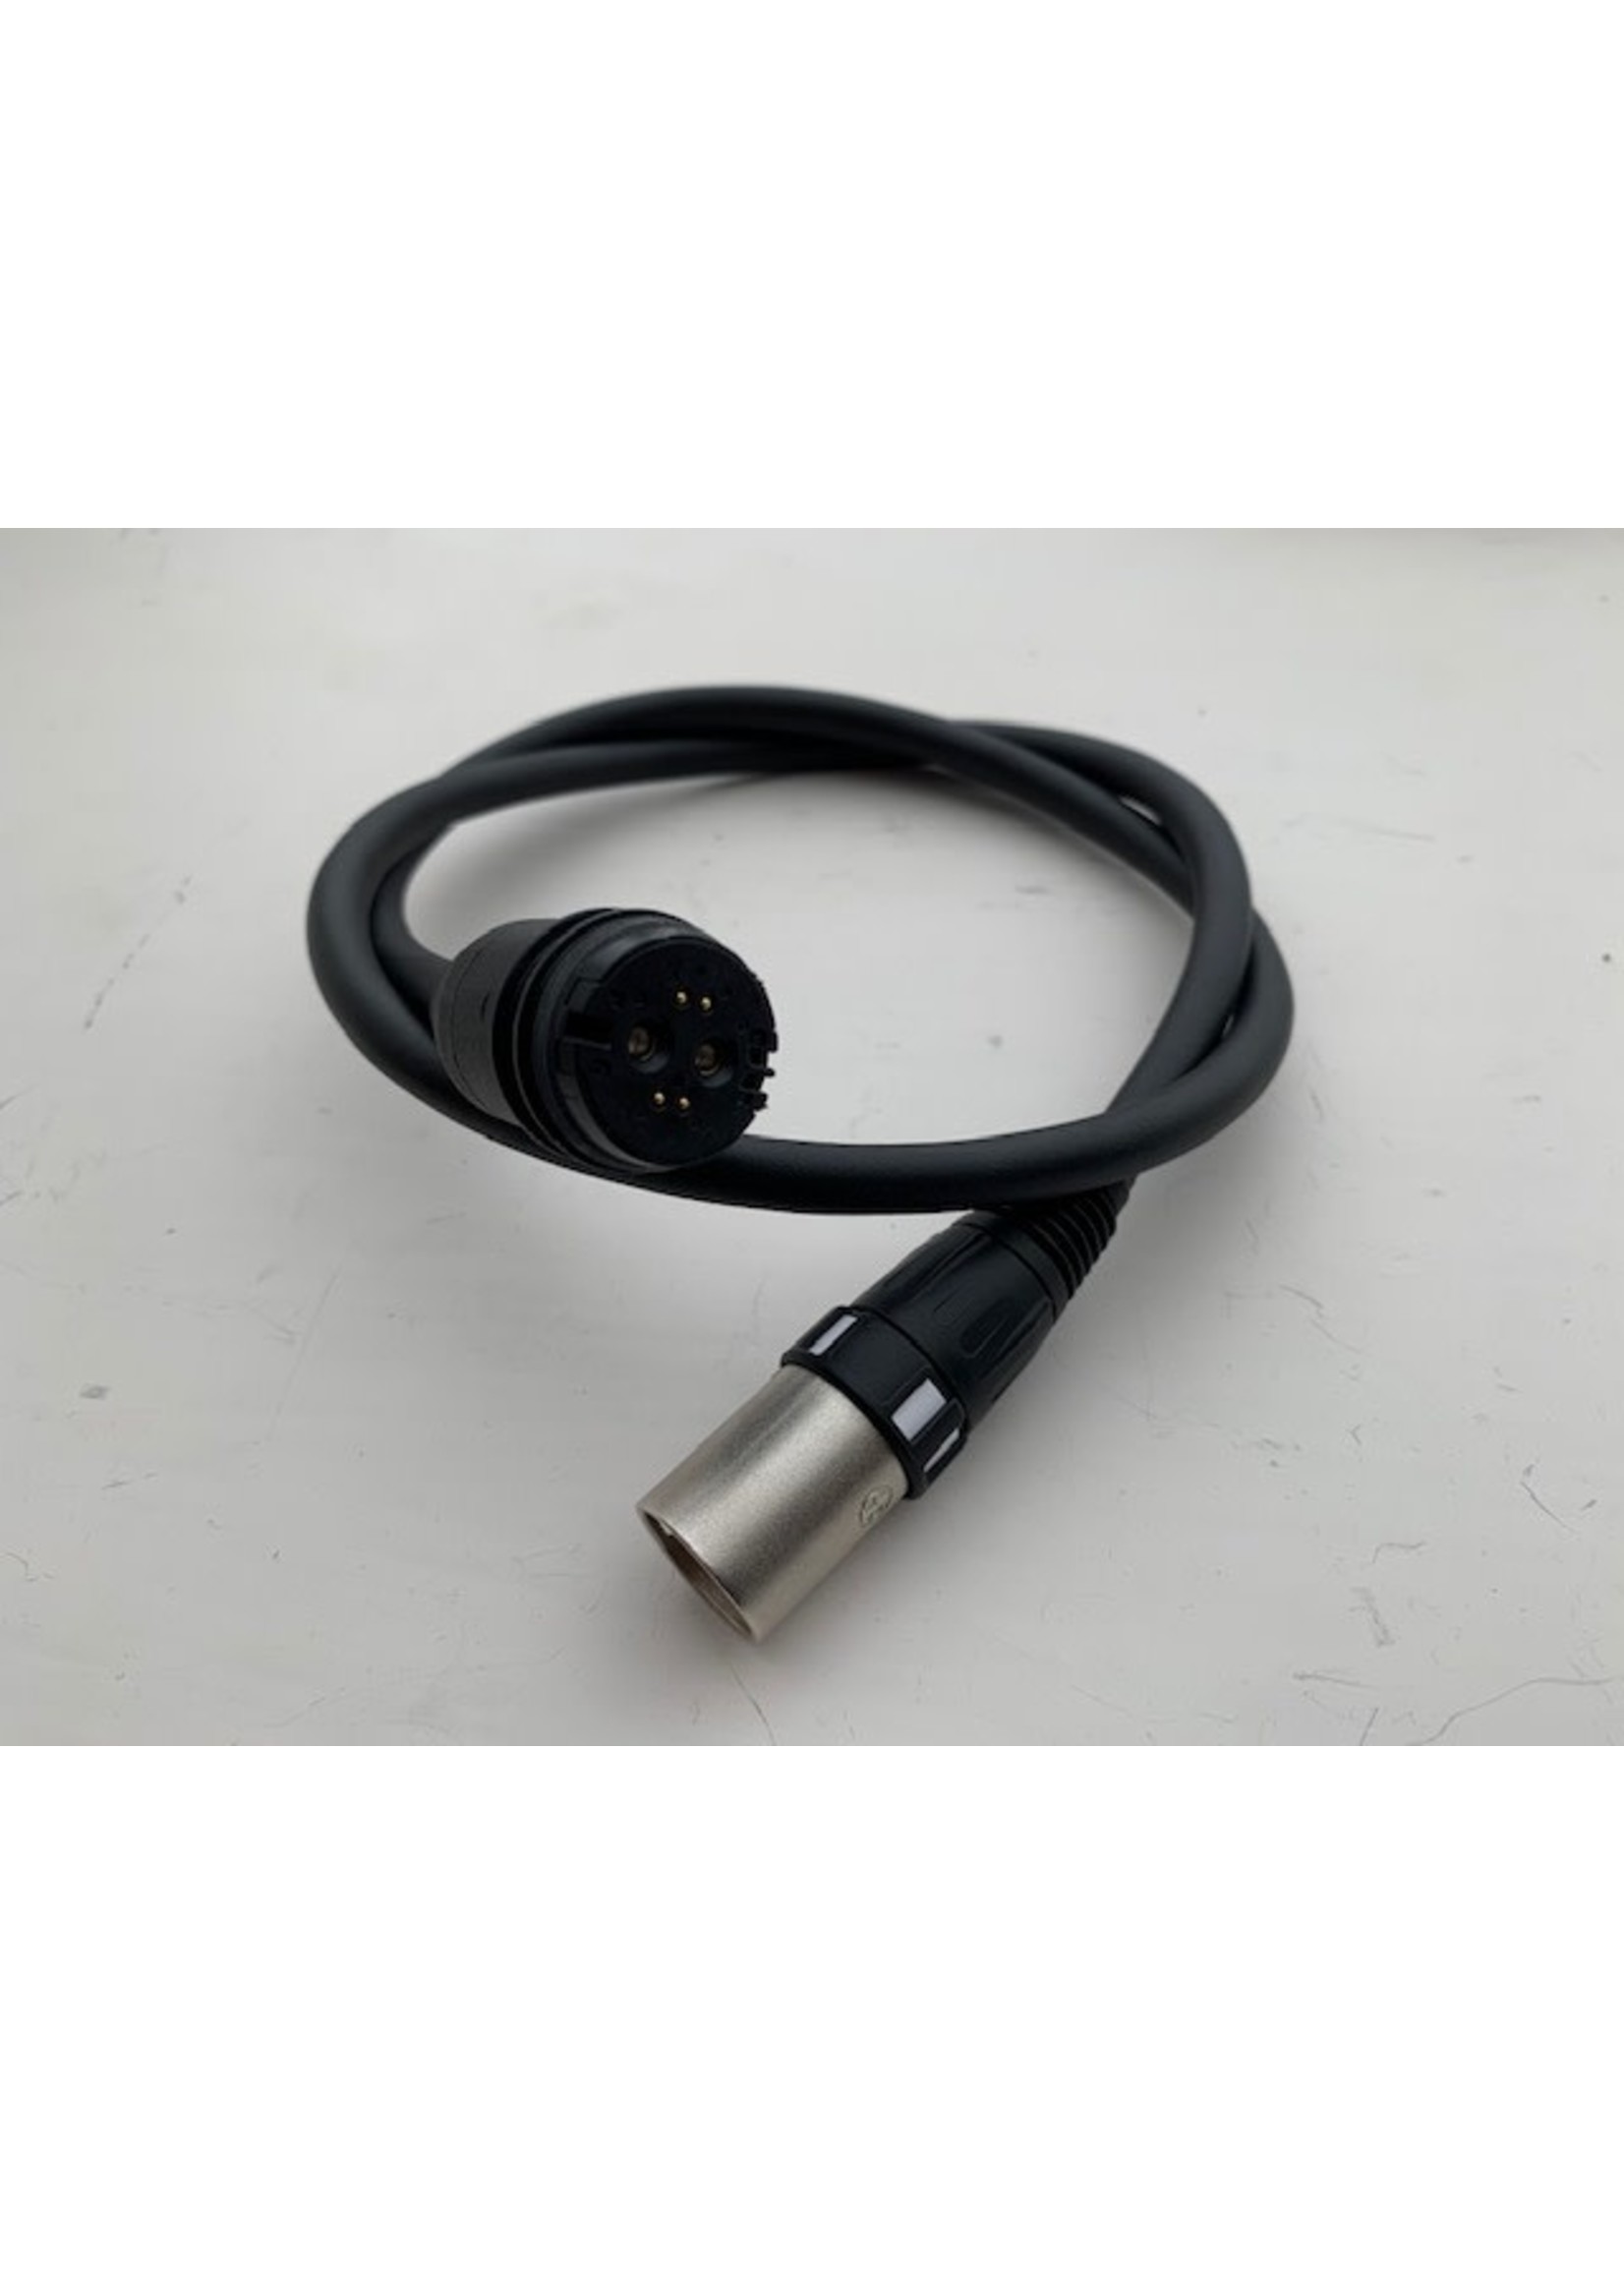 Rosenberger GoSwiss drive cable (Rosenberger Magnet Plug)